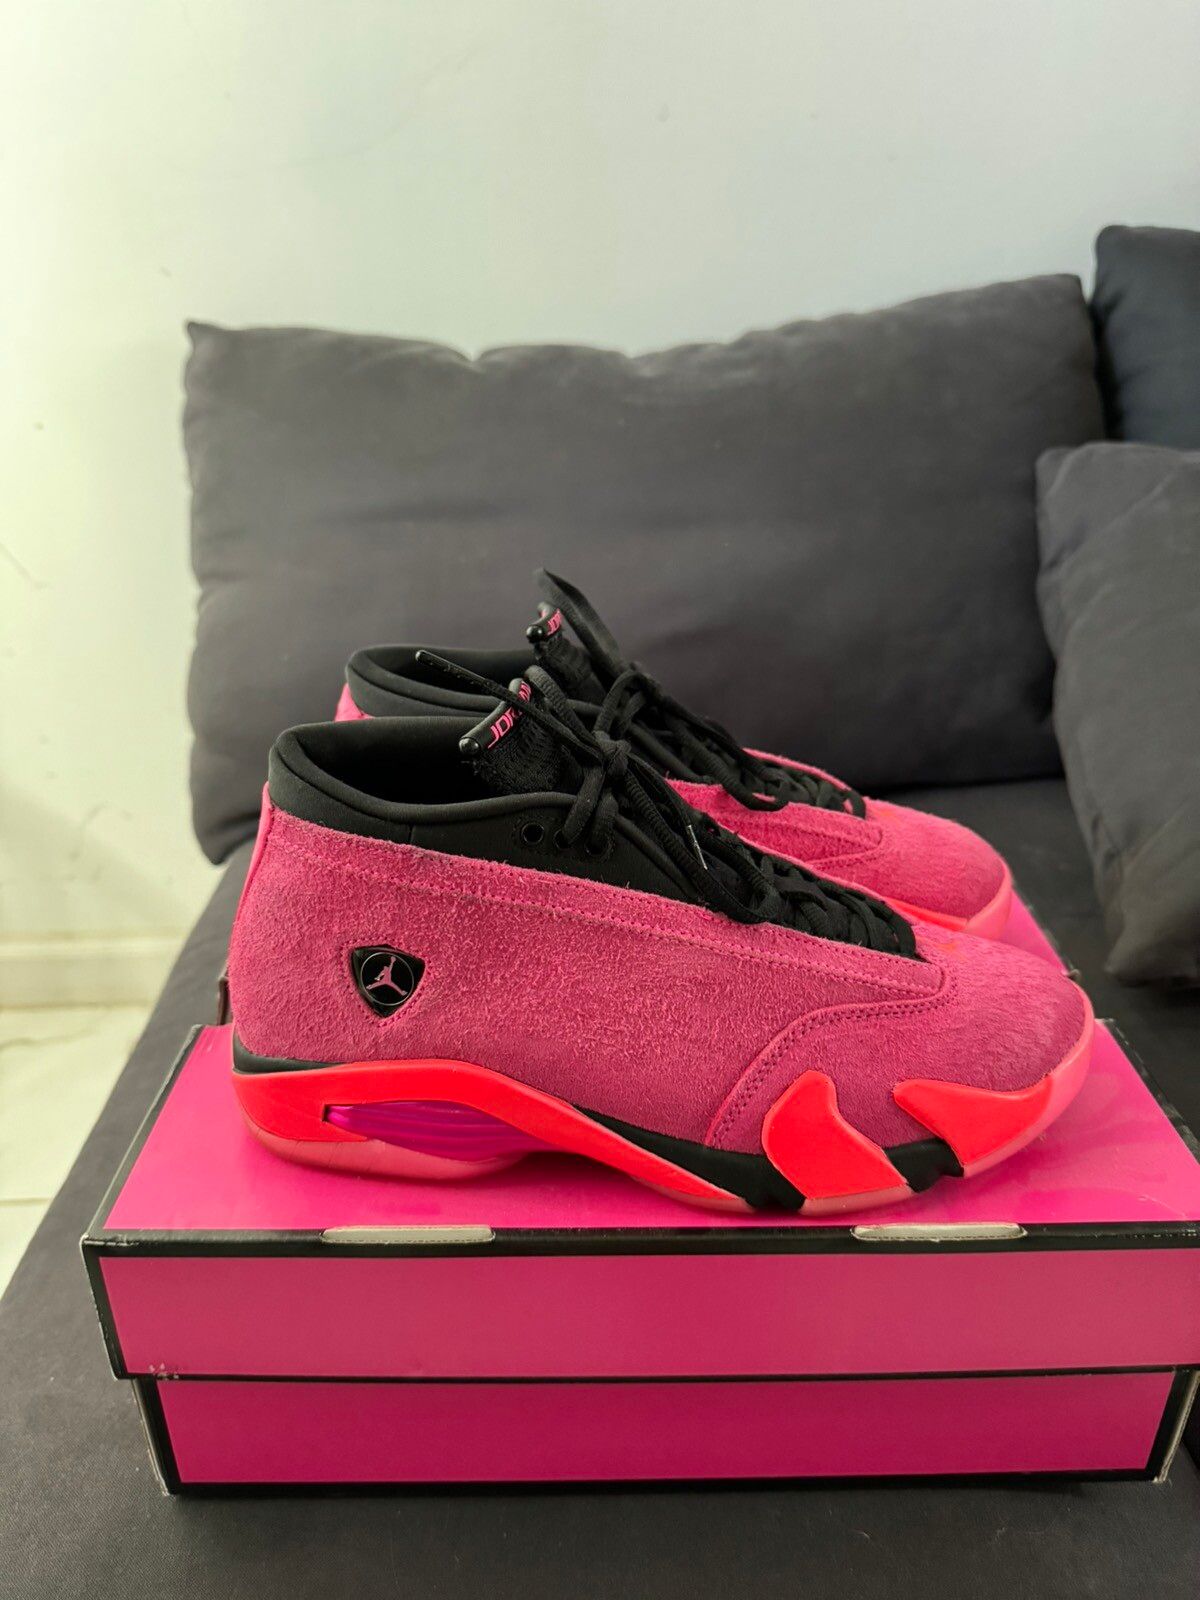 Pre-owned Jordan Brand 14 Retro Low Shocking Pink Shoes